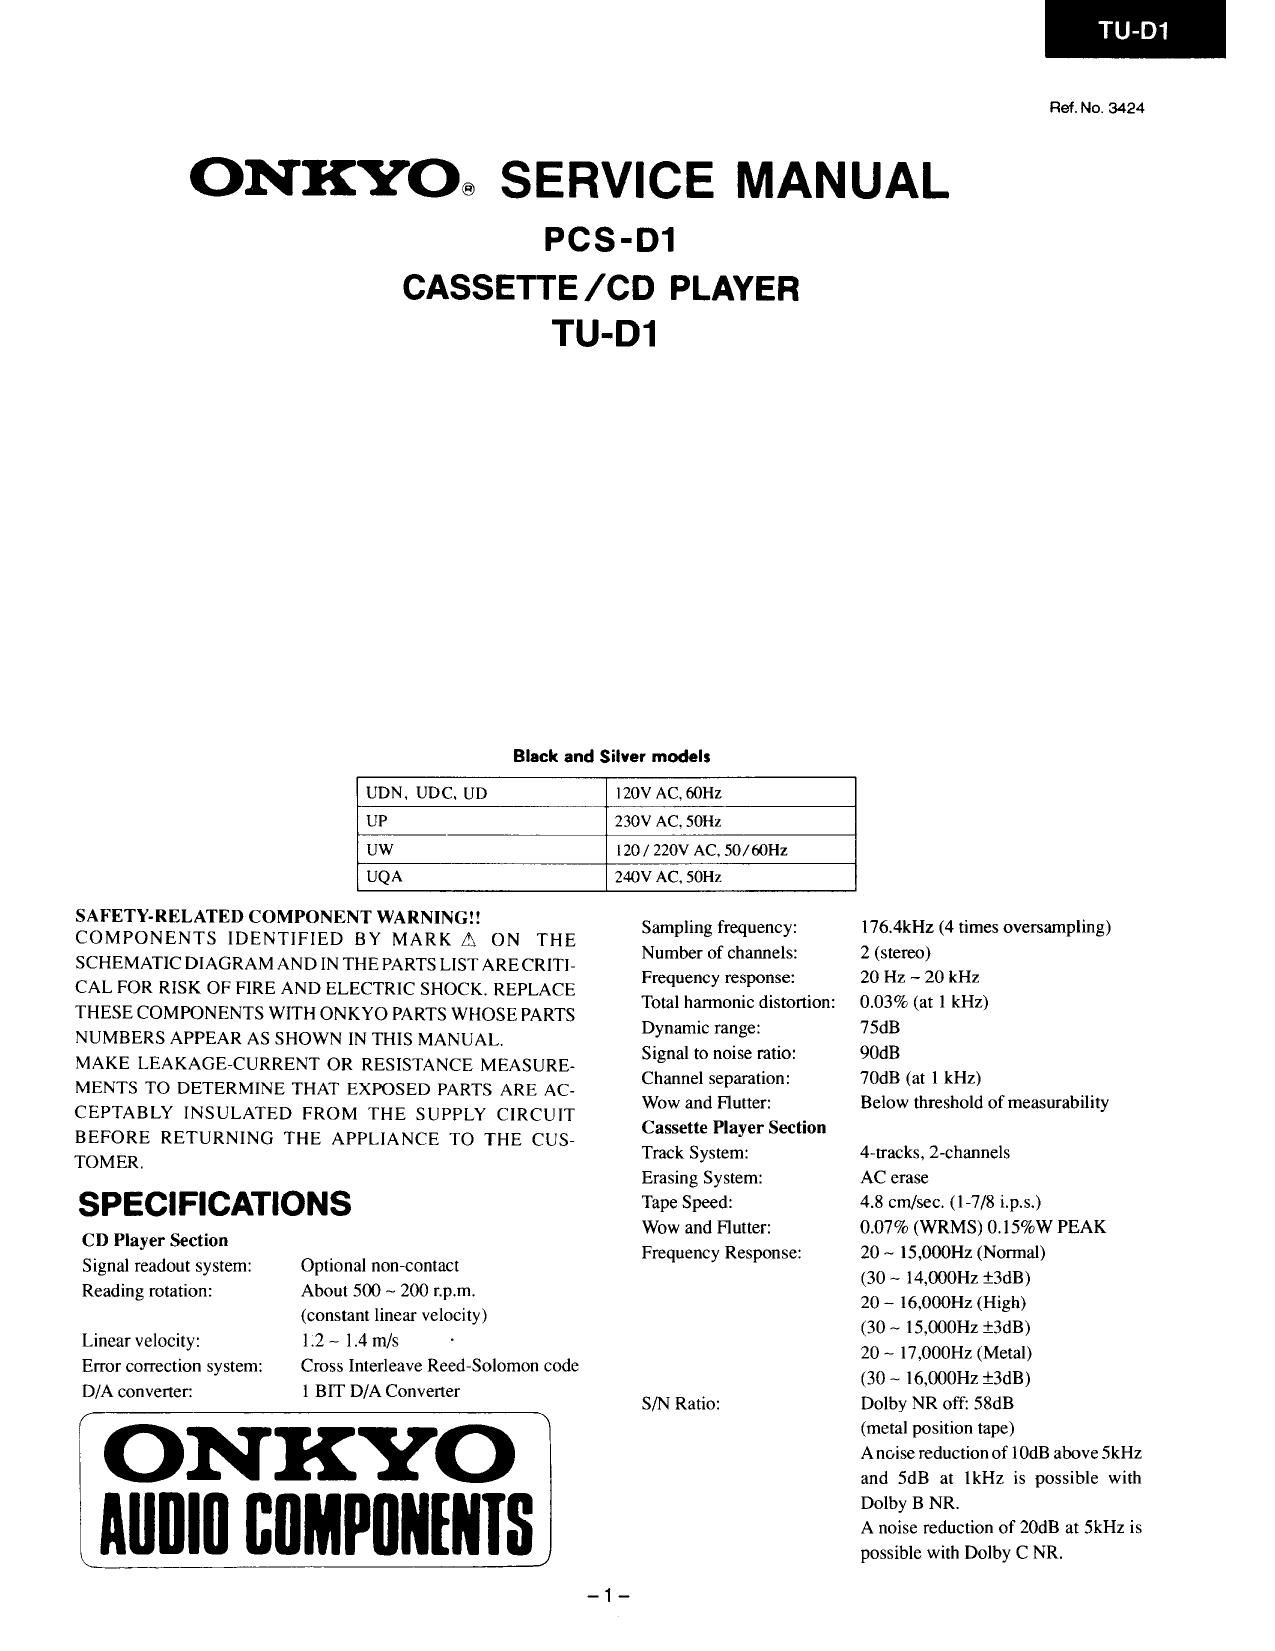 Onkyo TUD 1 Service Manual